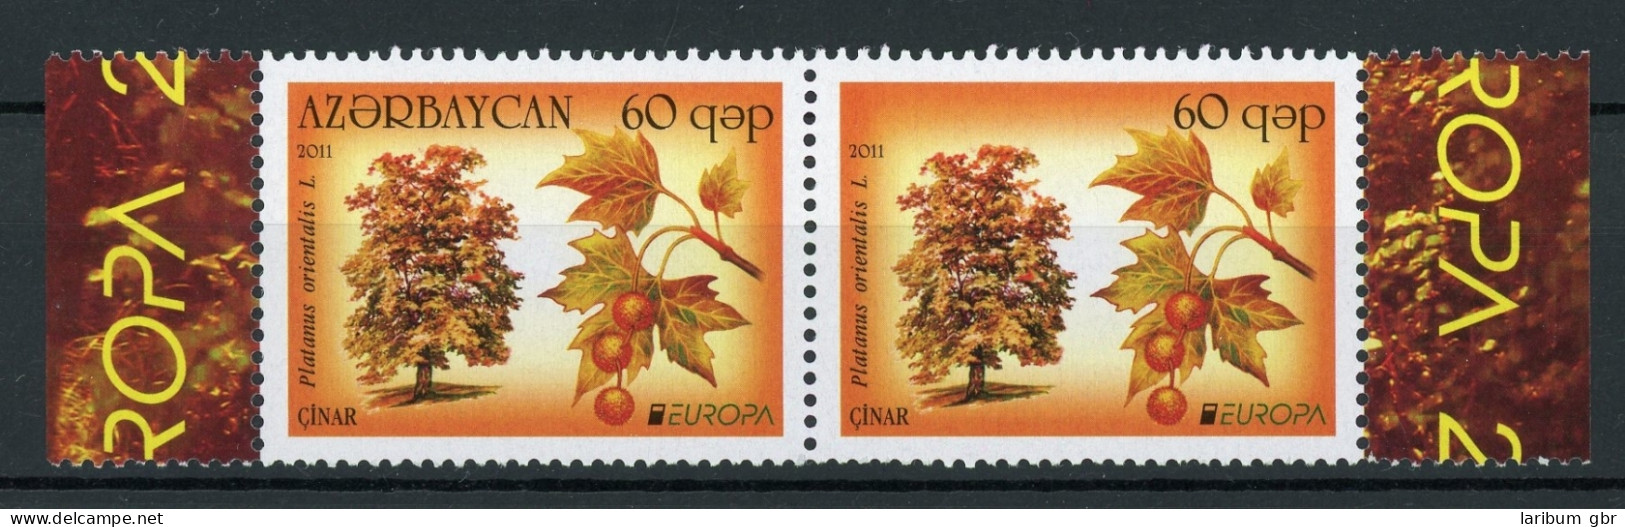 Aserbaidschan 841 I Postfrisch Fehlender Landesname, CEPT #HE030 - Azerbaiján